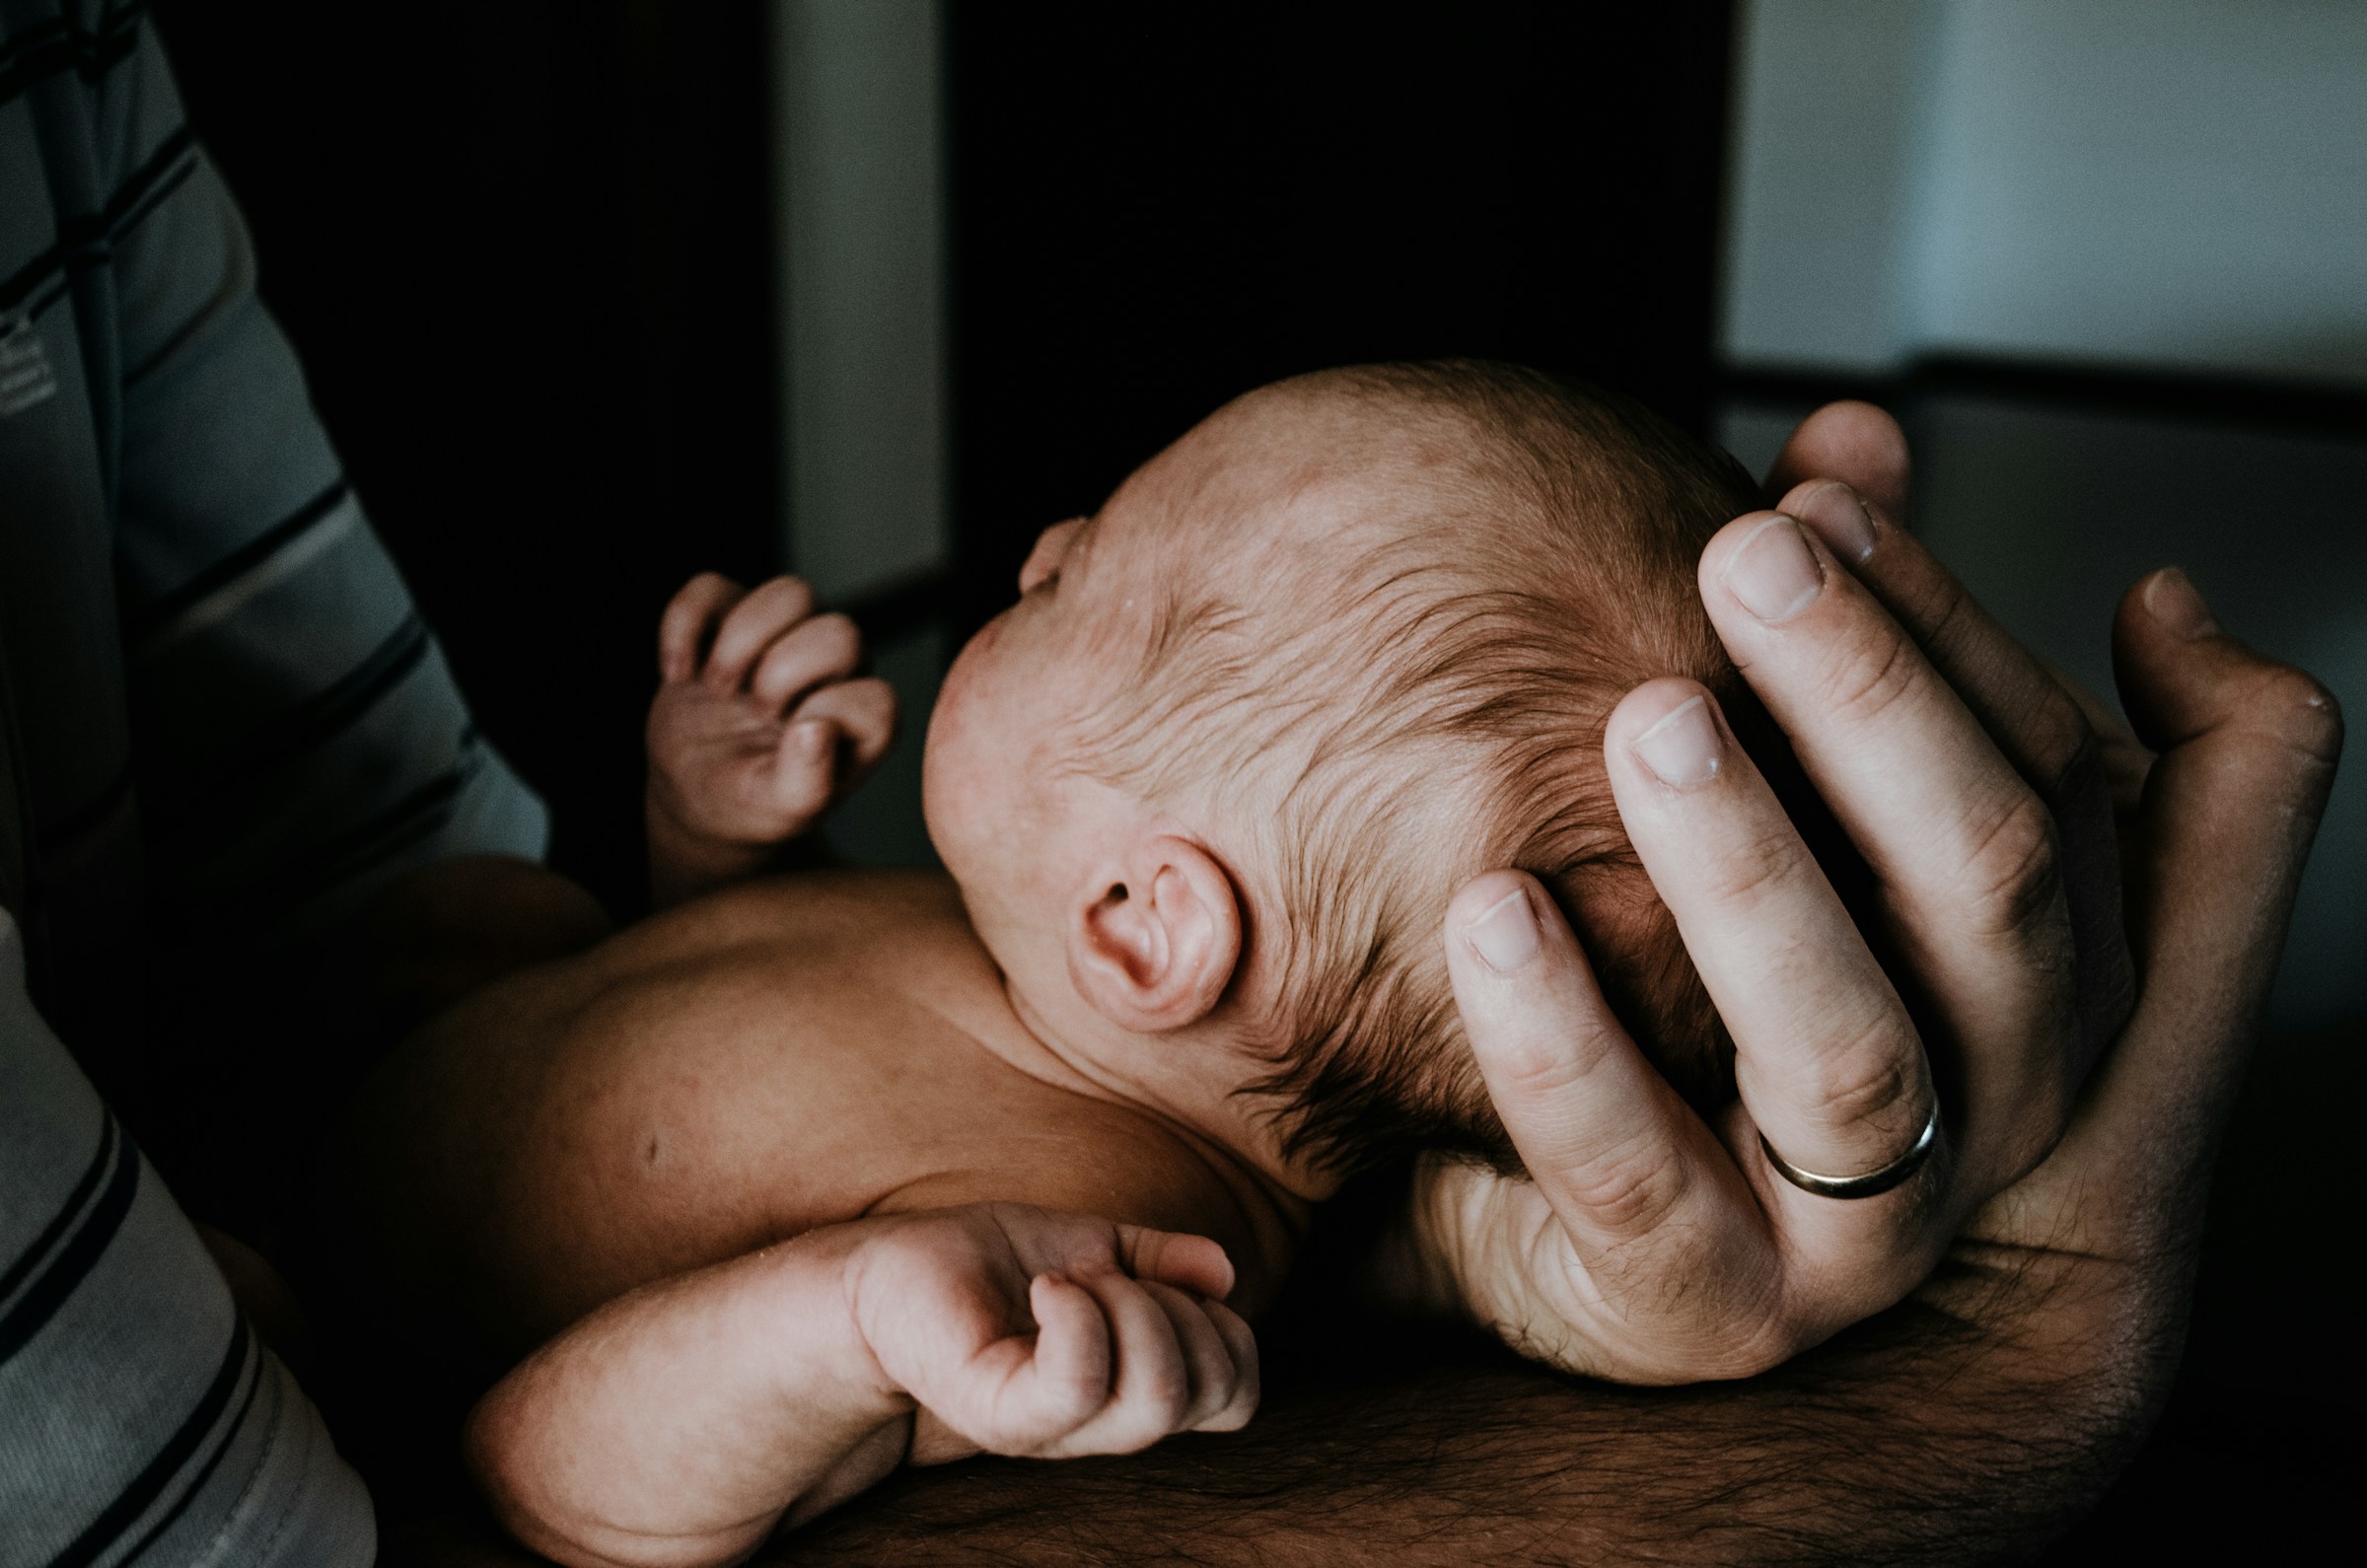 A man holding a newborn baby | Source: Unsplash